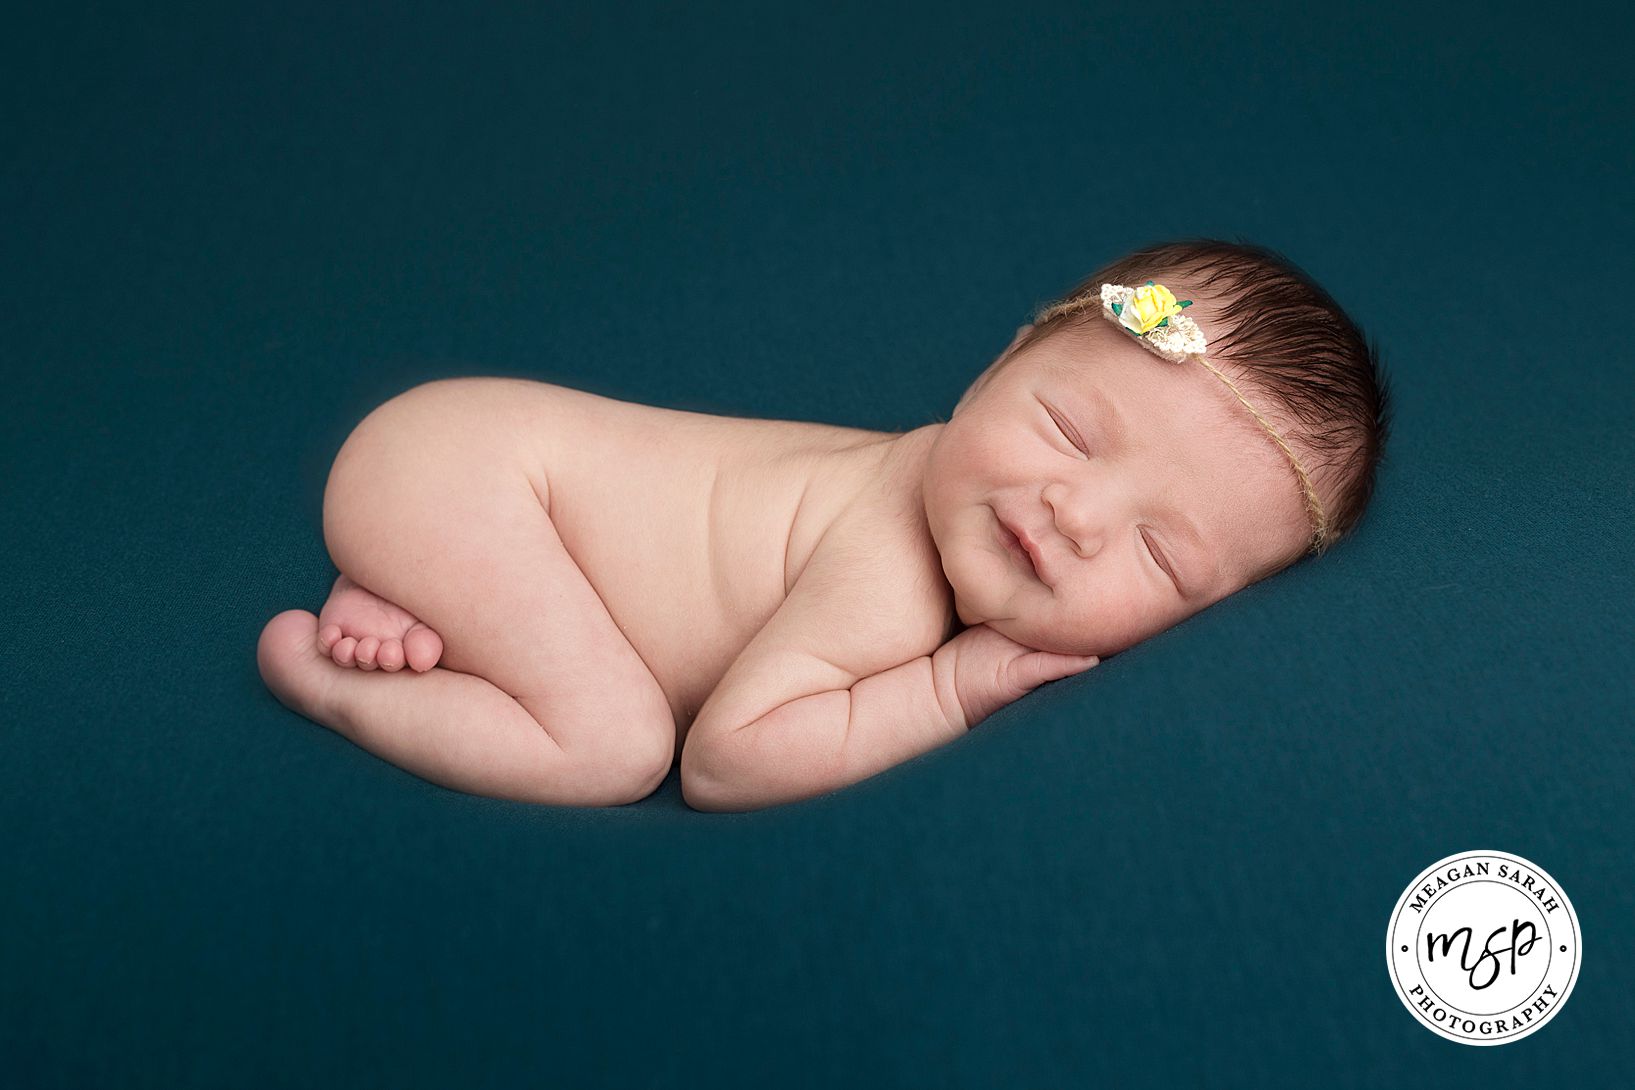 Leeds Newborn Photographer,Leeds newborn photography,Newborn Baby,Cute,Baby Girl,Fine Art,Newborn Photos,Pictures,